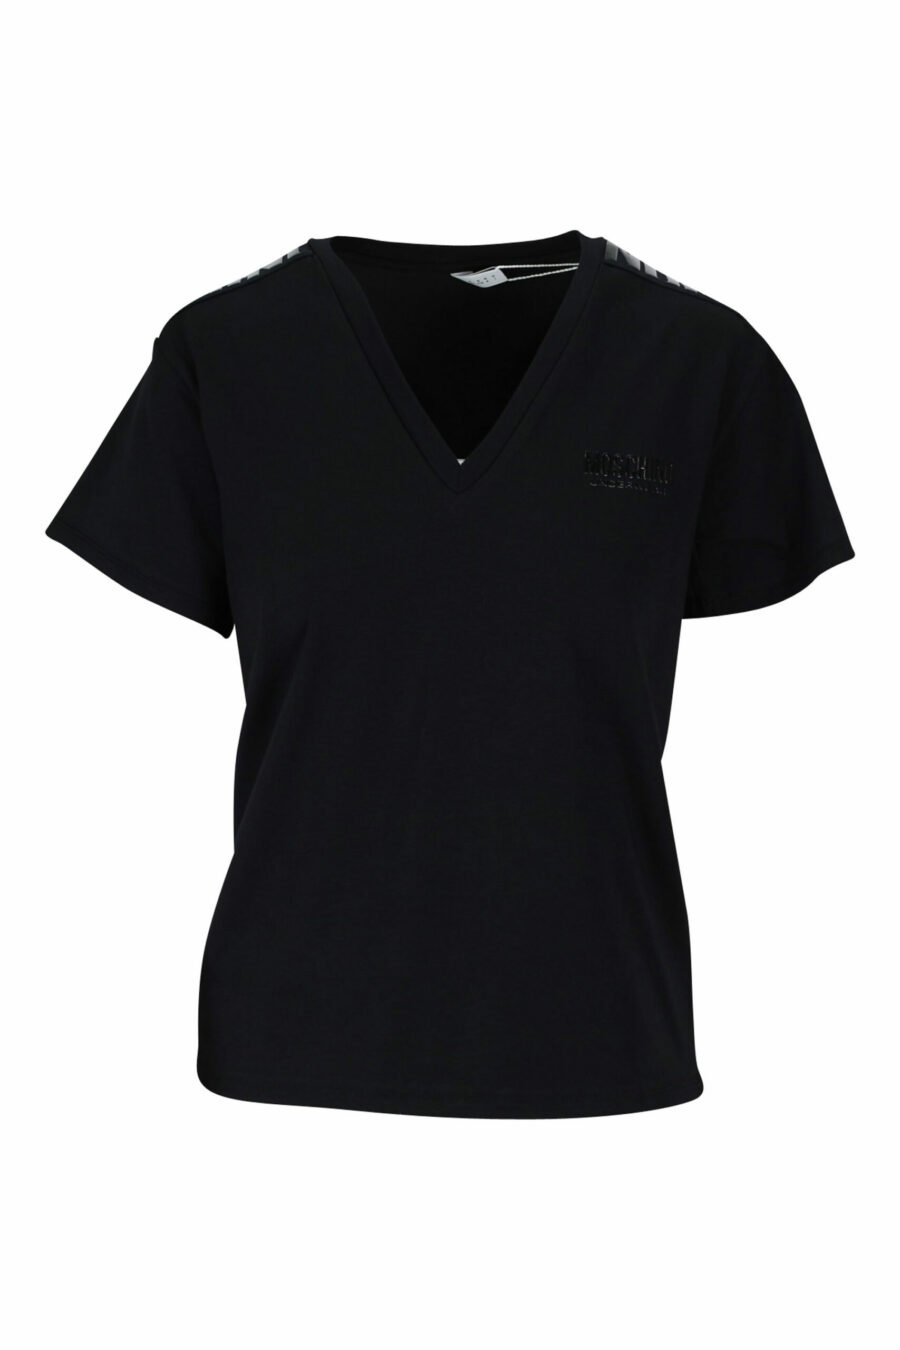 Schwarzes T-Shirt mit V-Ausschnitt und monochromem Bandlogo - 889316614954 skaliert